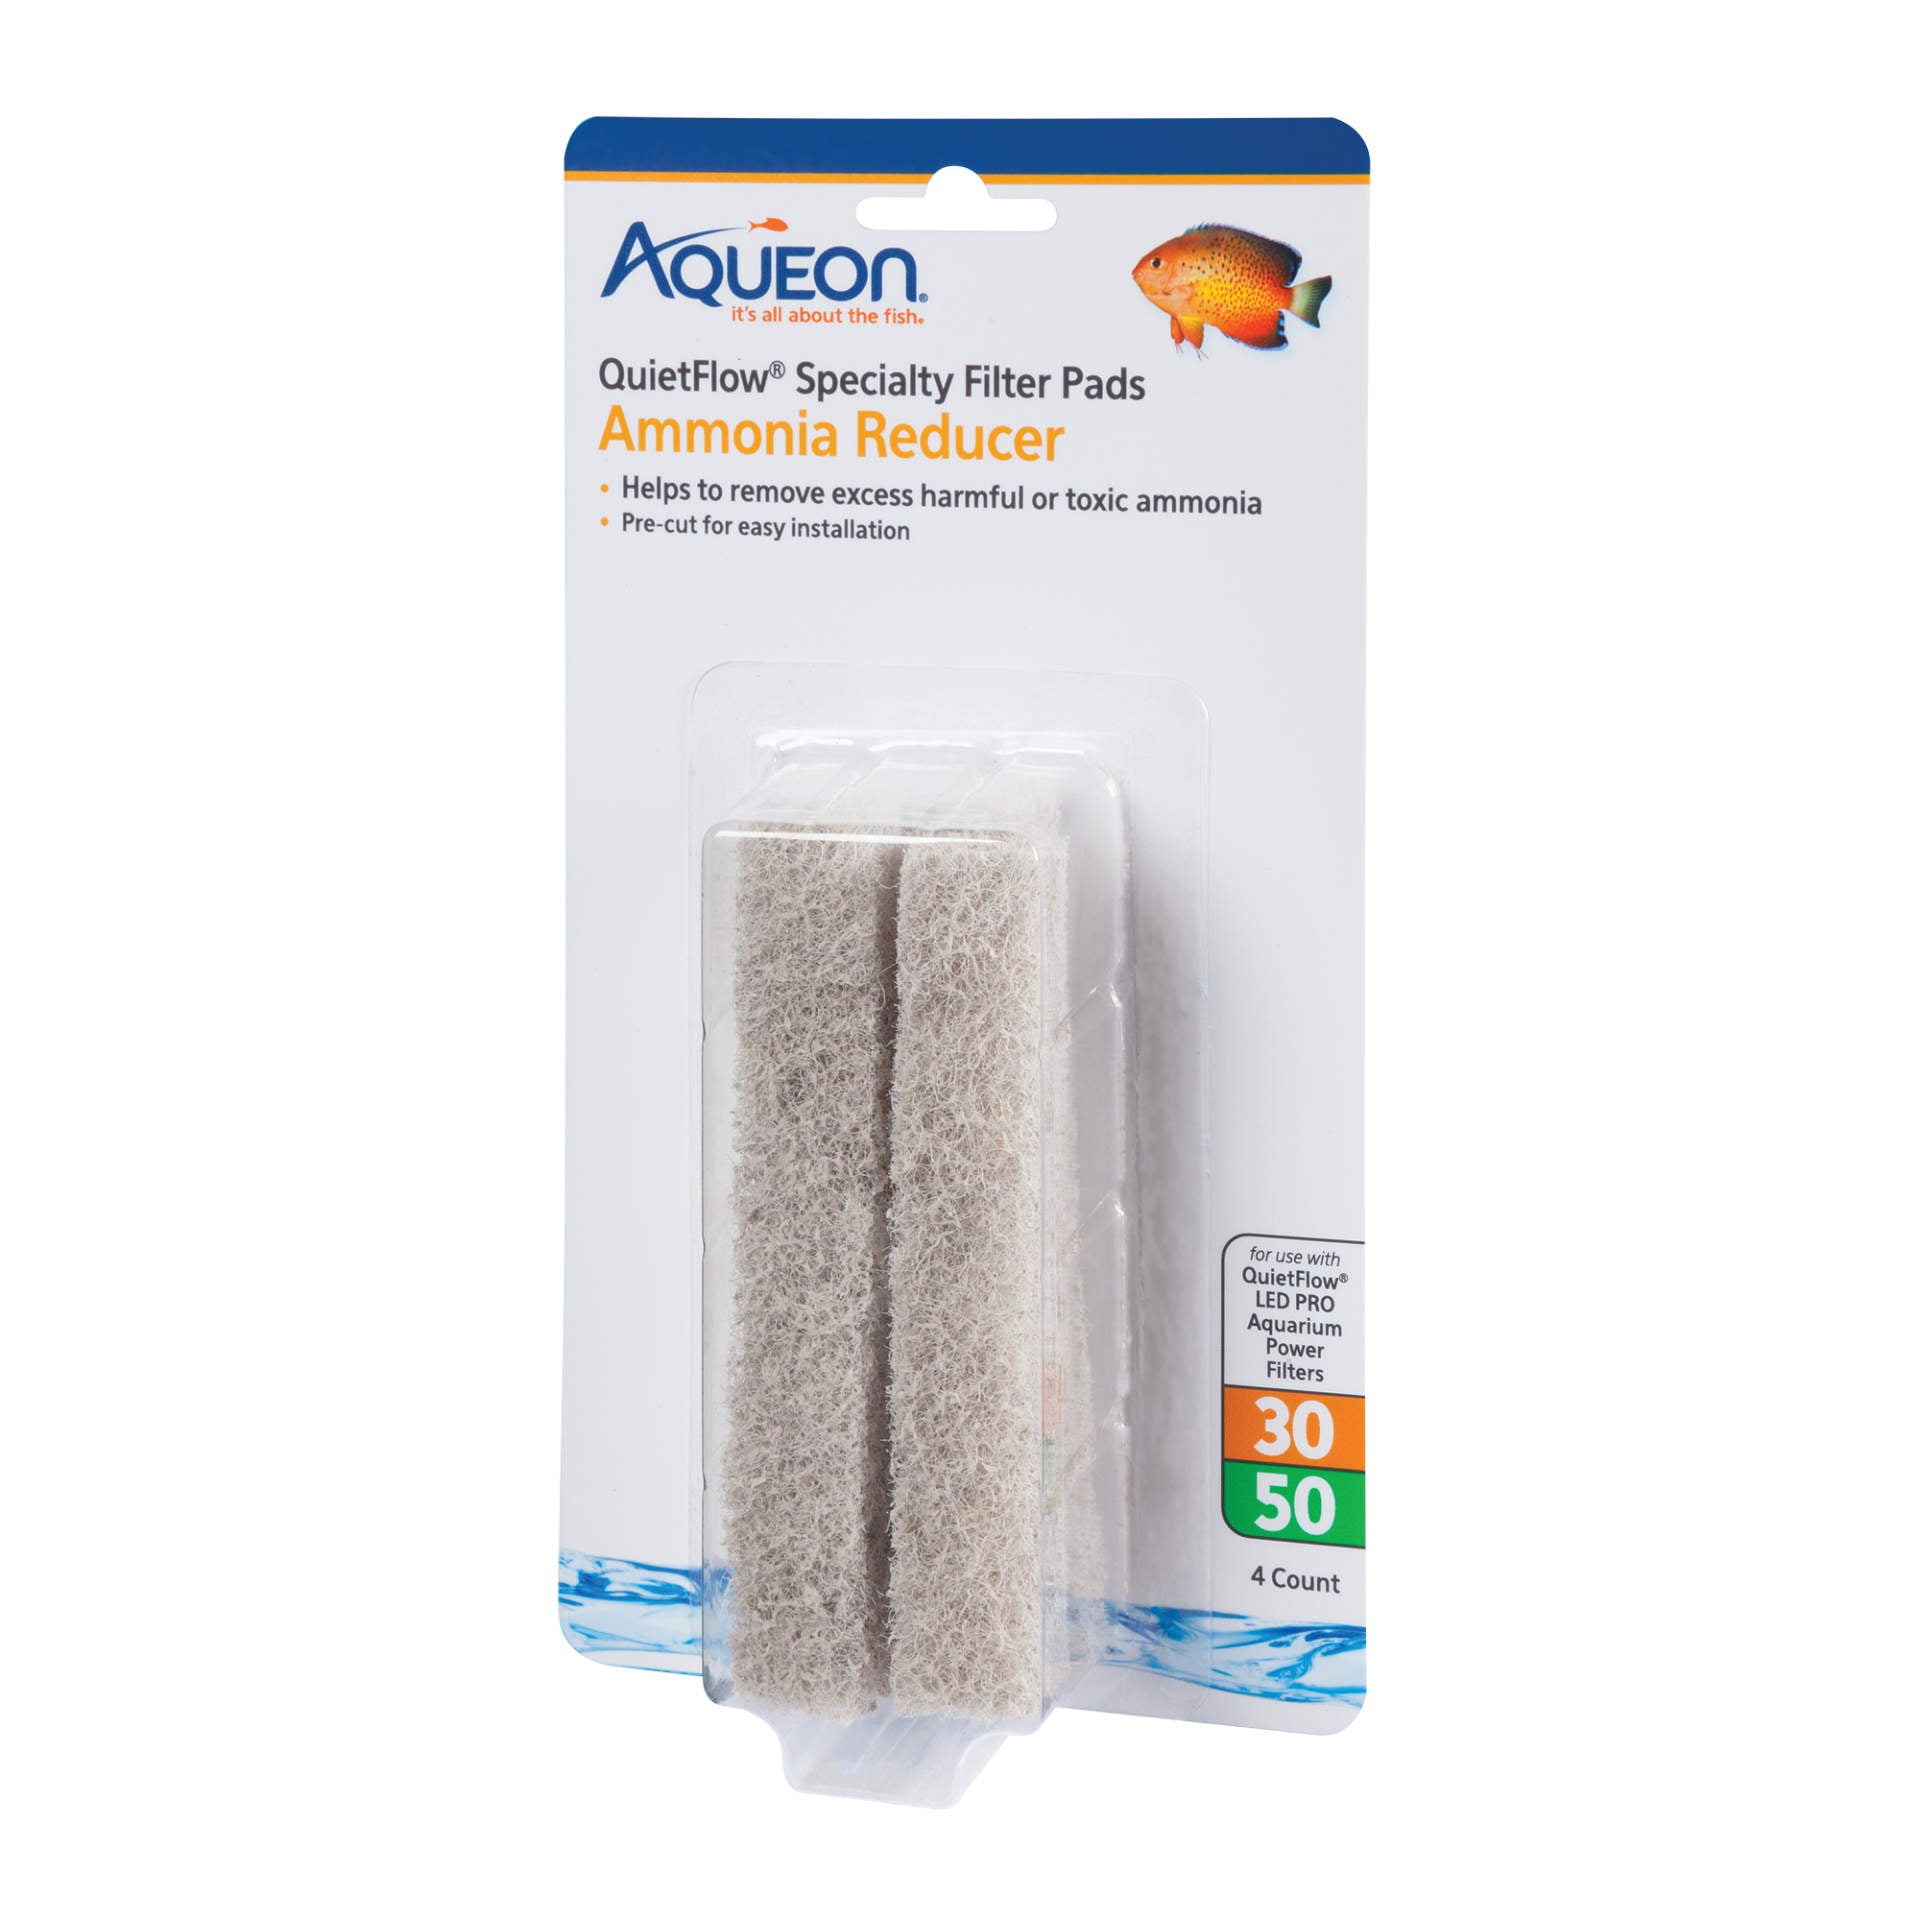 Aqueon Quietflow Specialty Filter Pads